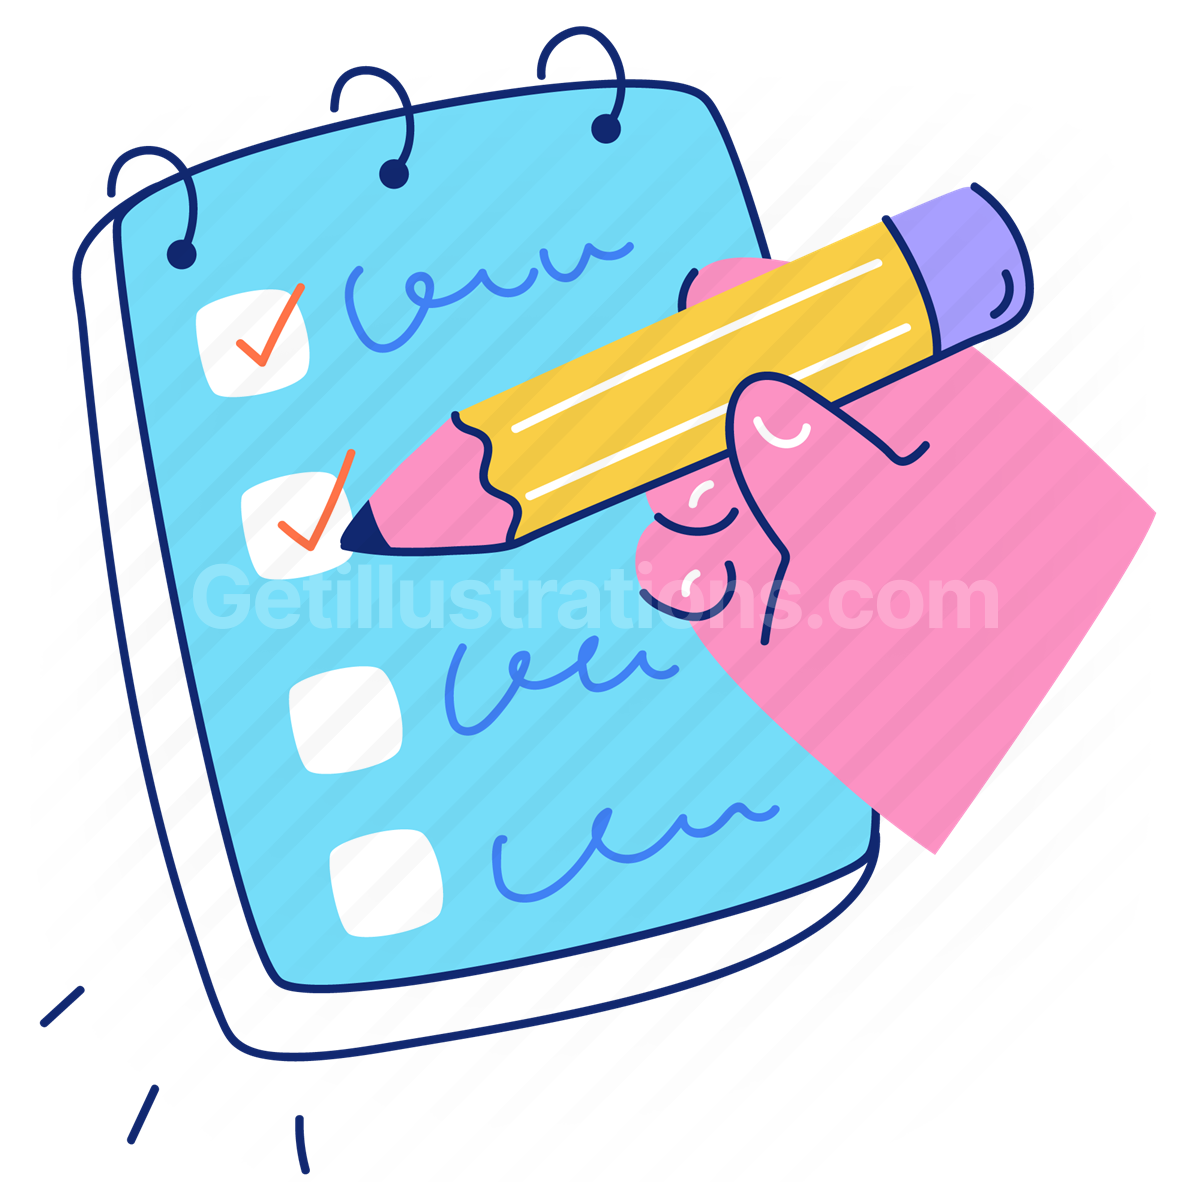 checklist, to do list, list, pencil, notebook, notepad, hand, gesture